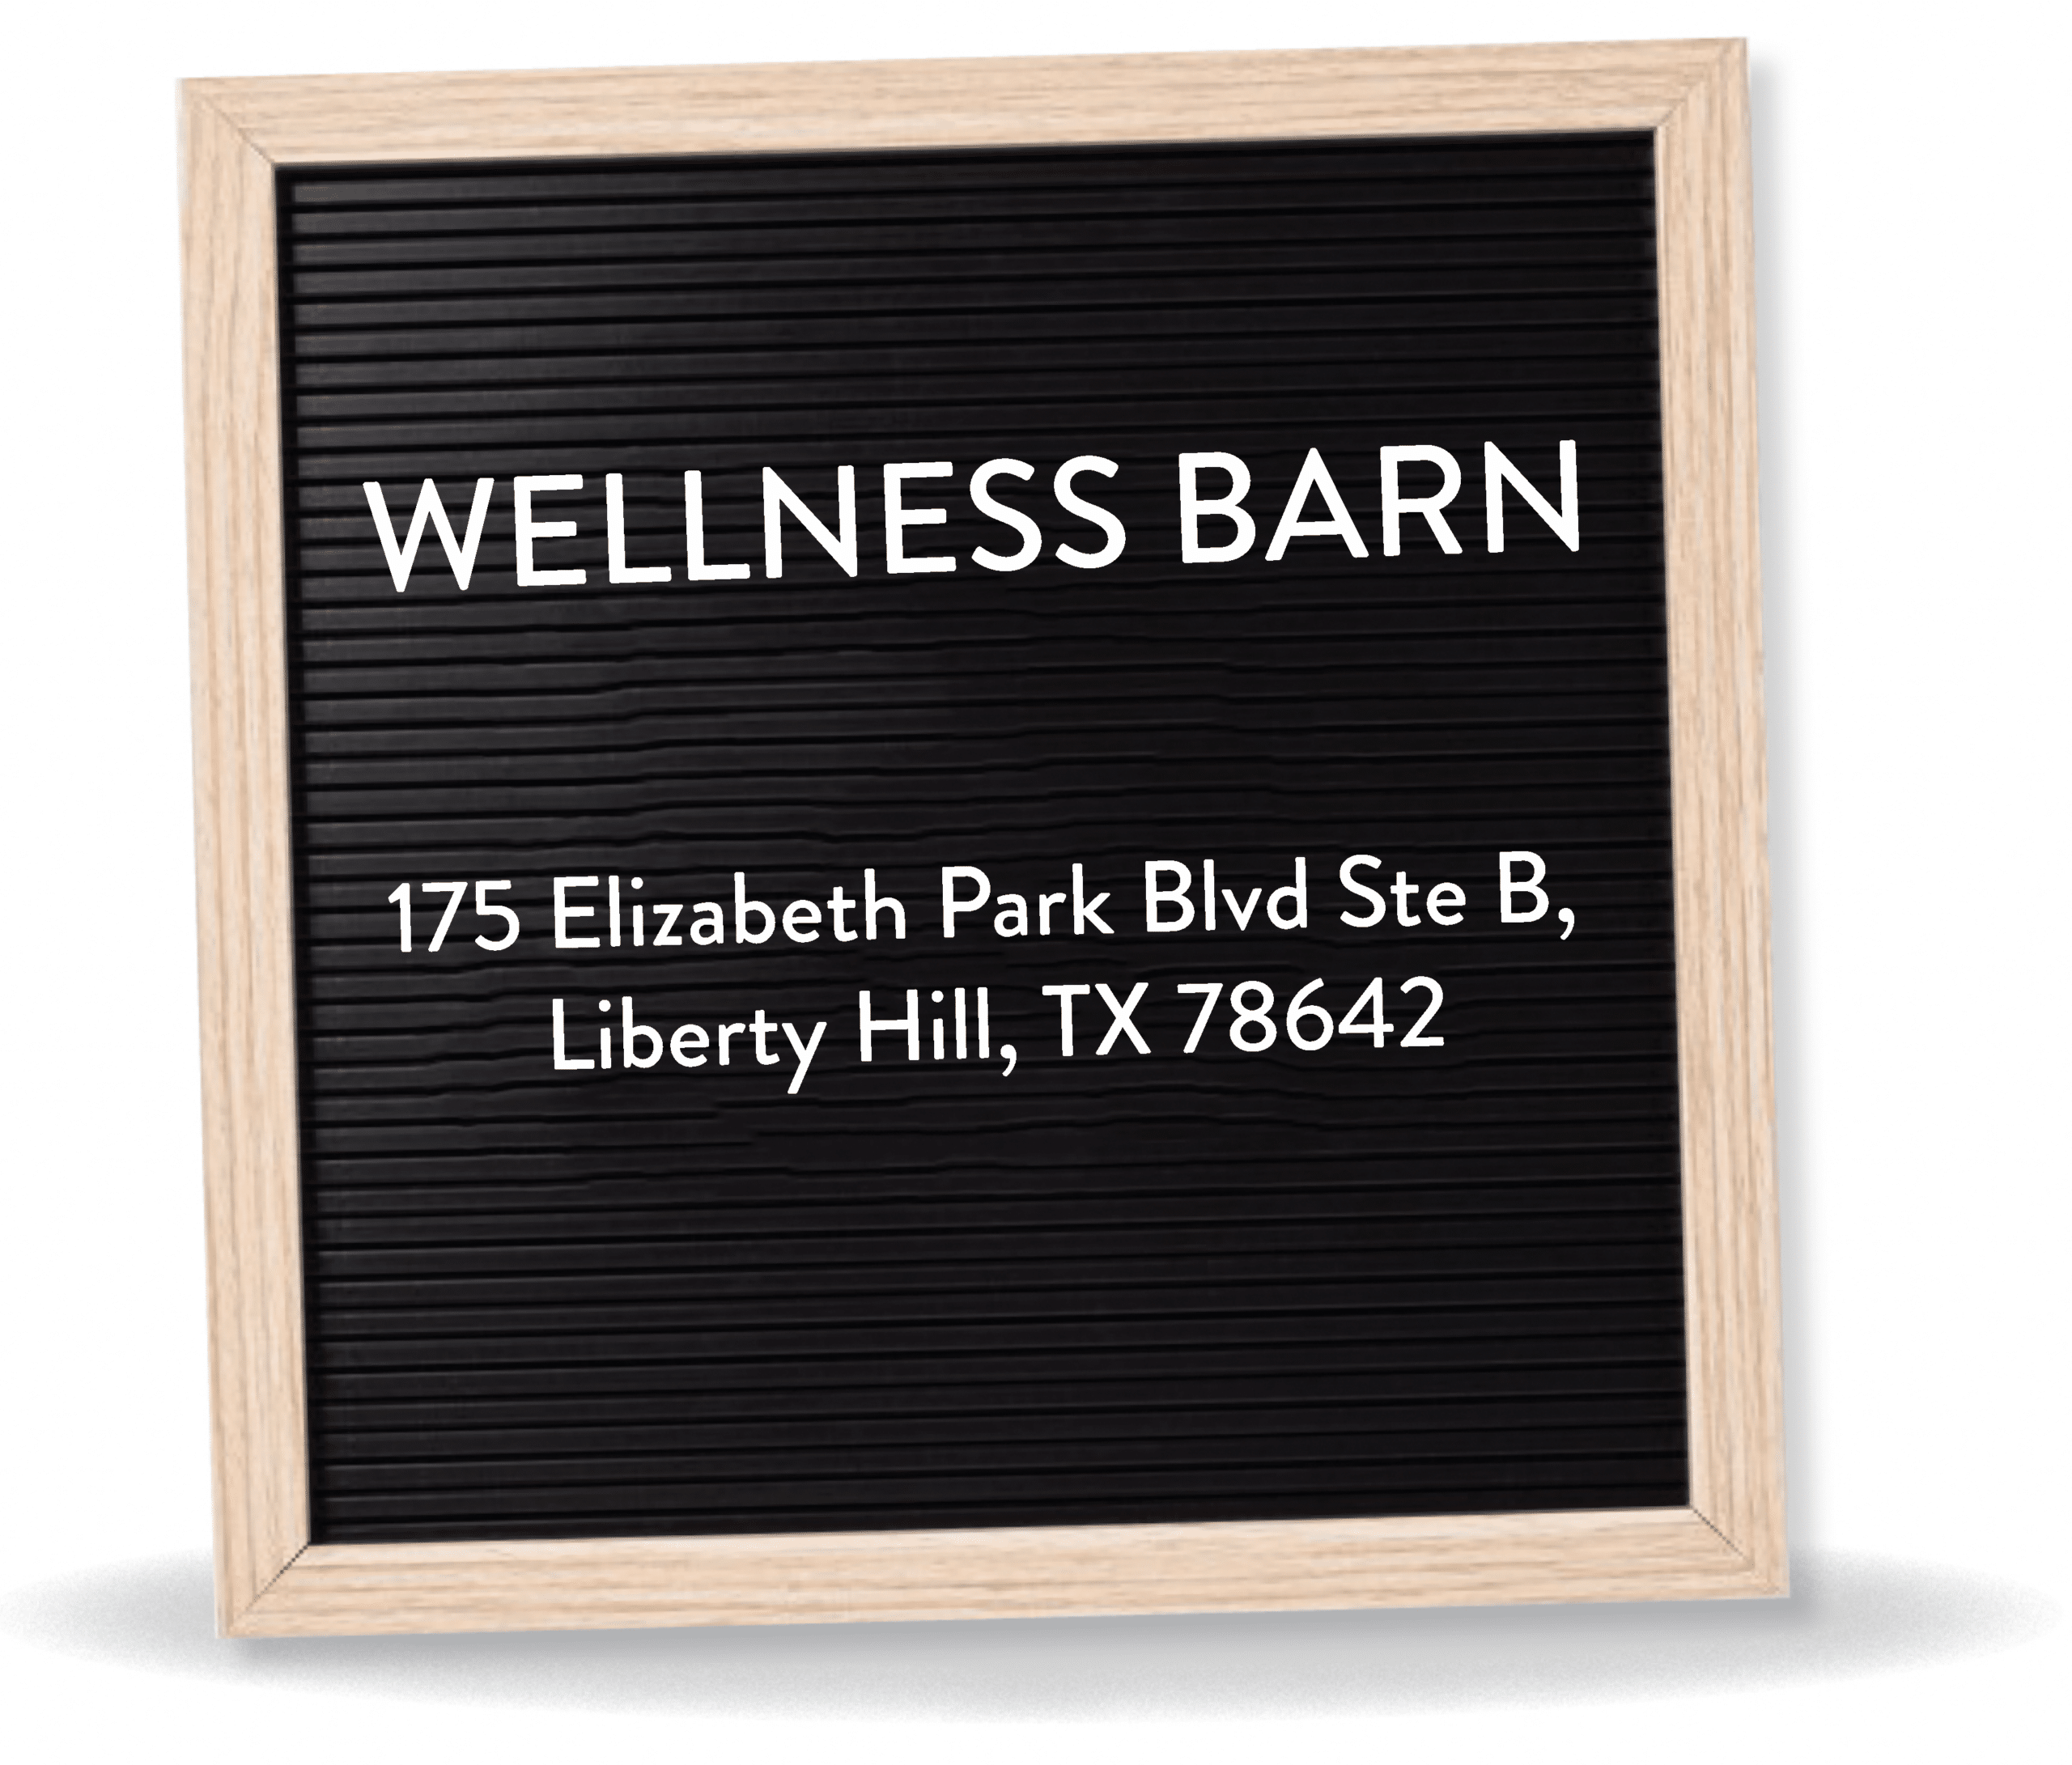 Wellness Barn address